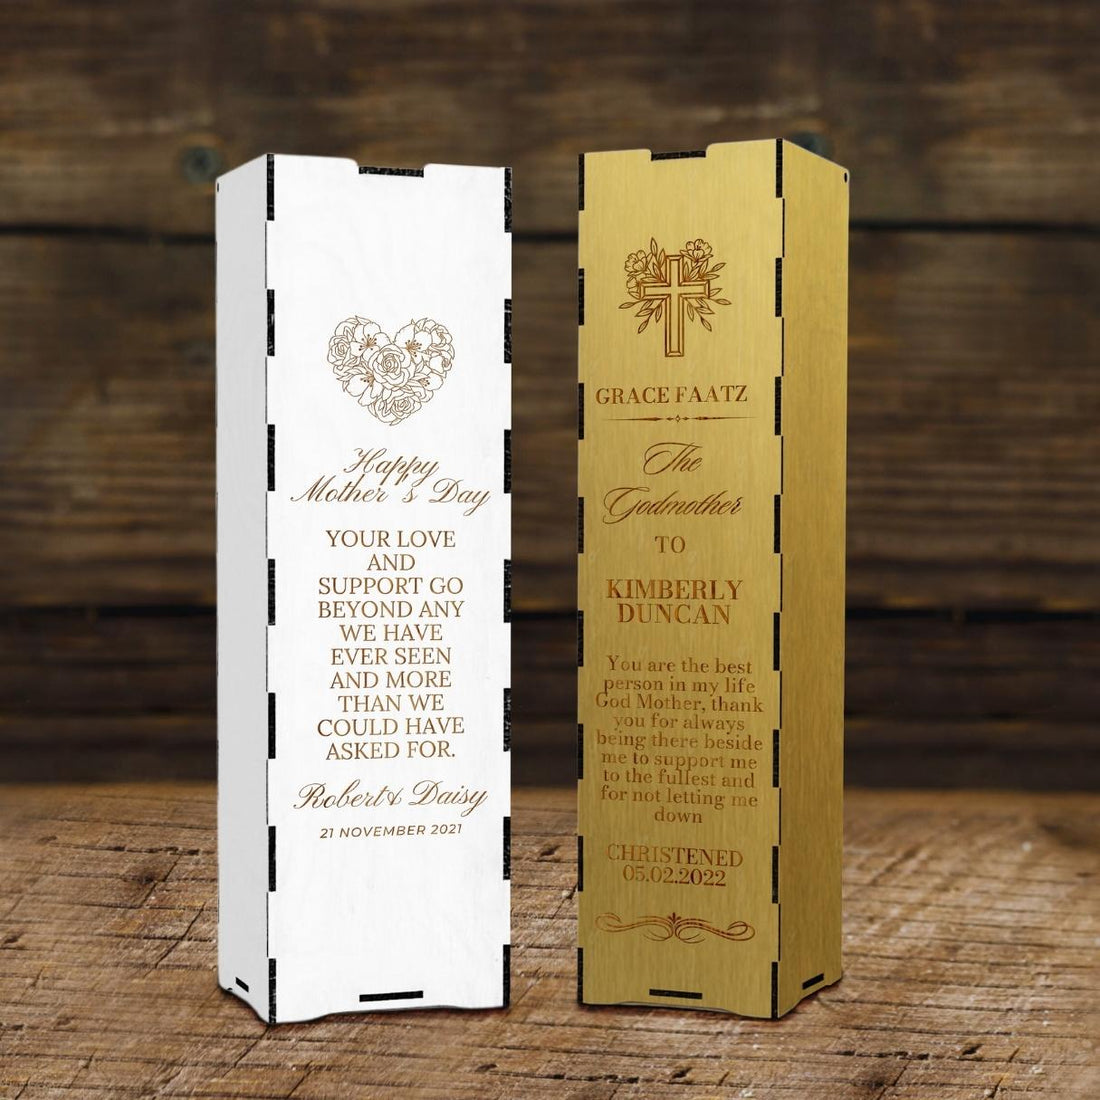 Custom Made Laser Cut & Engraved Wooden Wine Box, Personalised Plywood/ MDF Name/ Logo Wedding, Birthday, Corporate Wine Bottle Gift Boxes